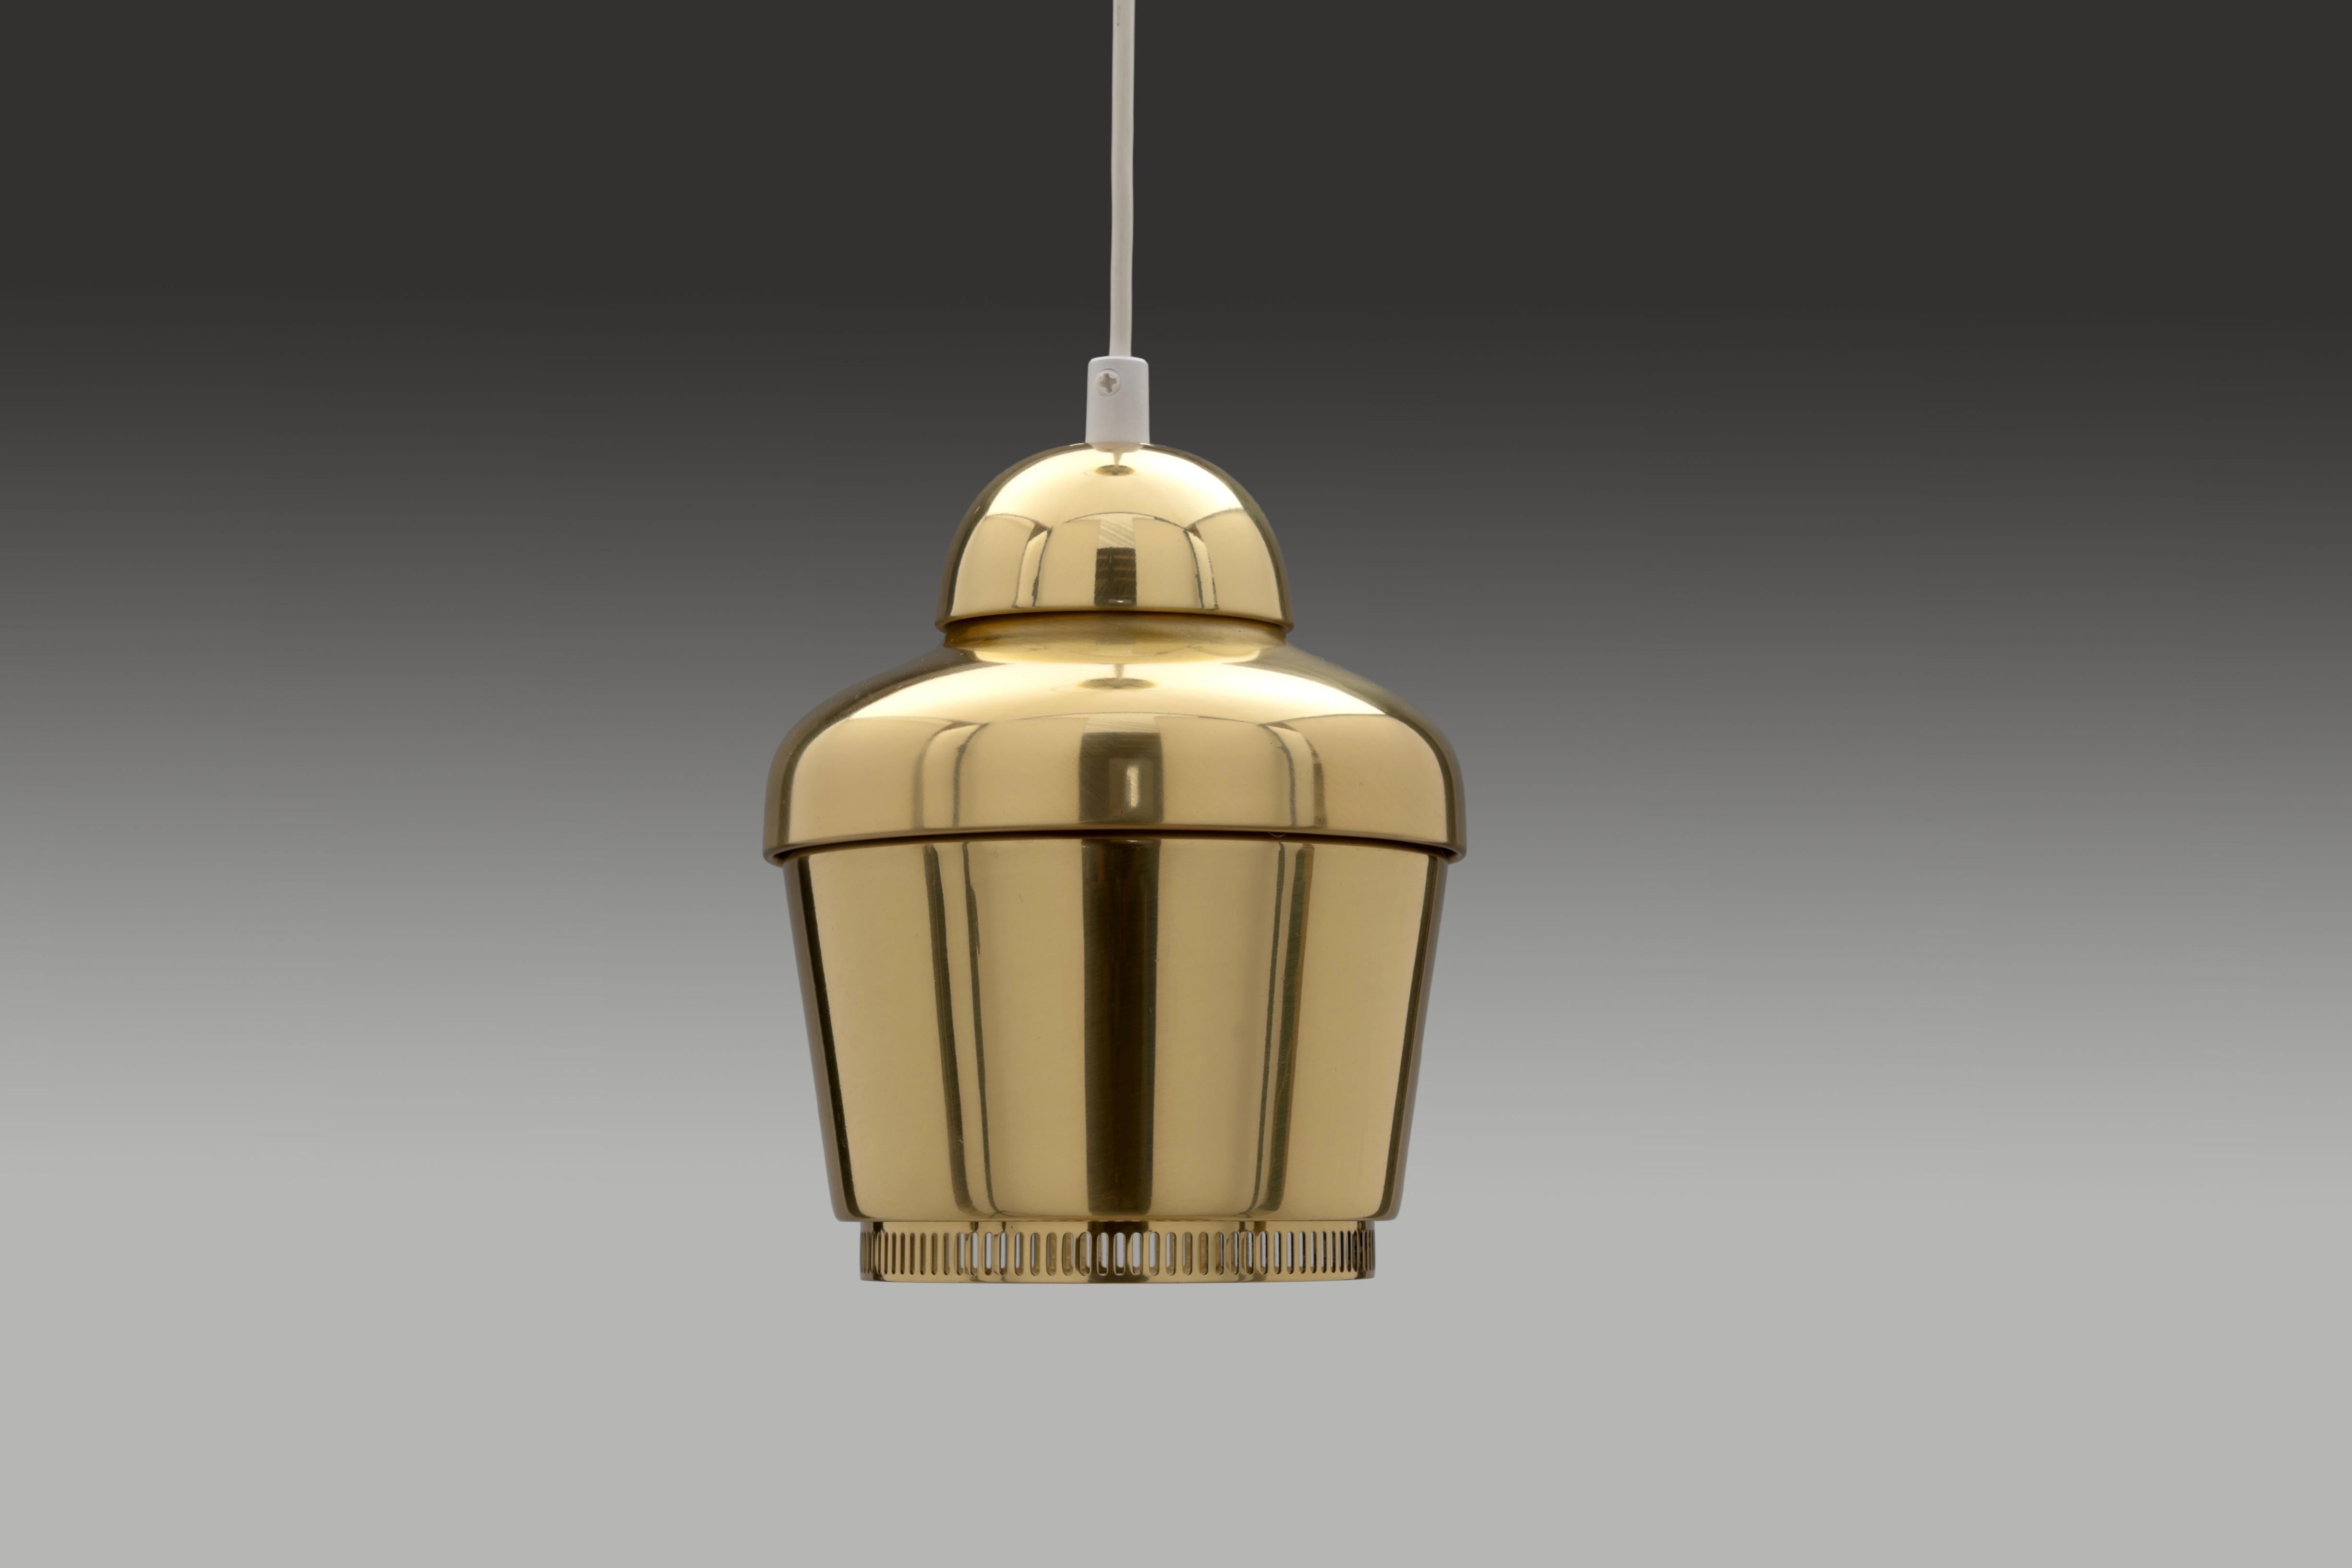 Brass 'Kultakello' Model A 330 'Golden Bell' Pendant by Alvar Aalto In Good Condition For Sale In Utrecht, NL